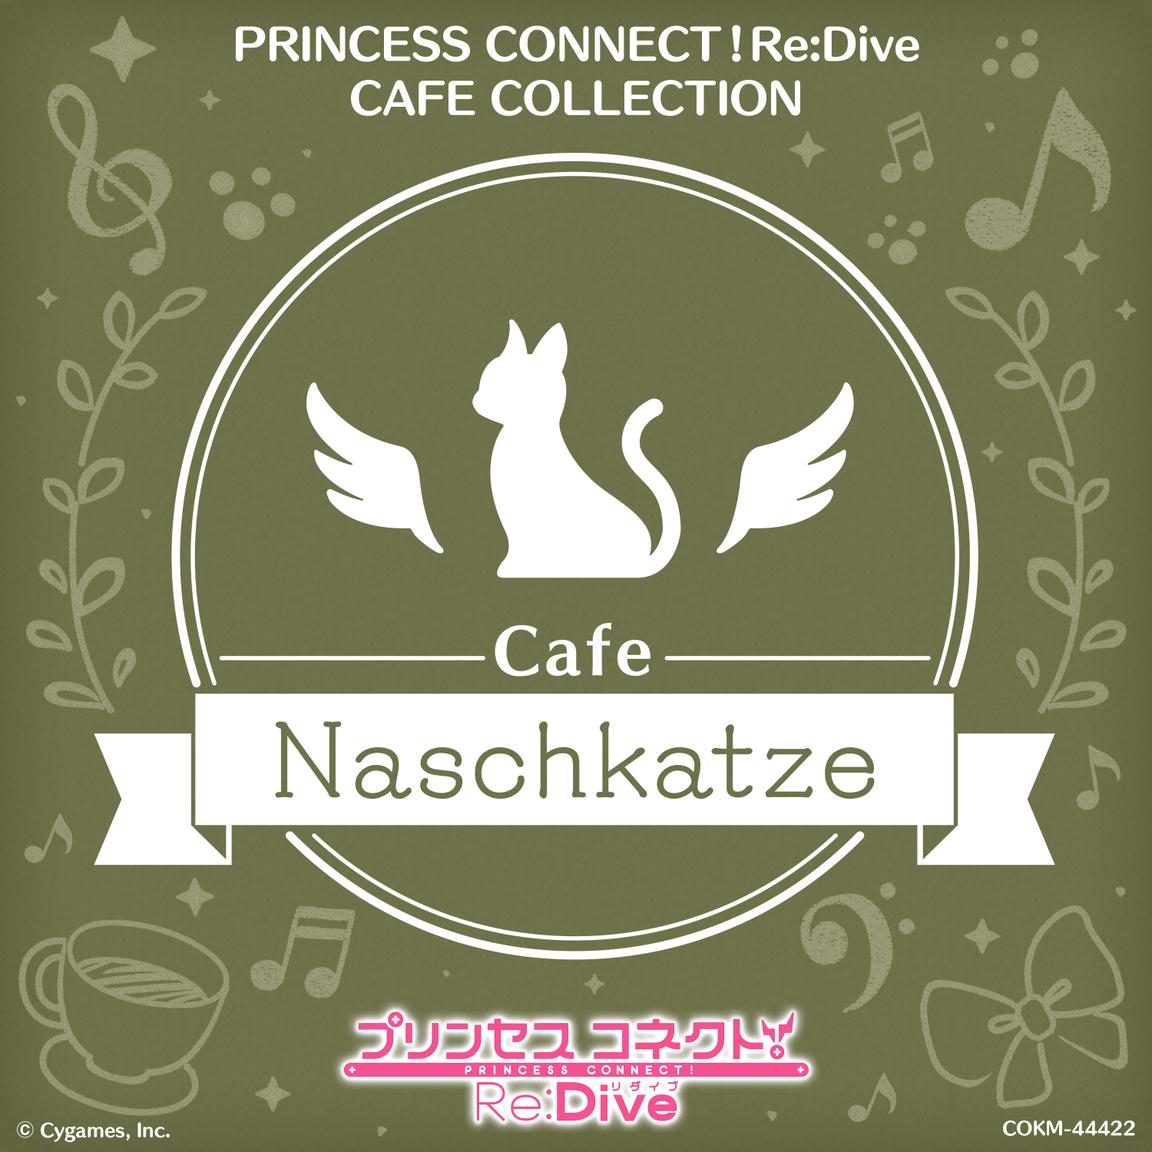 Princess Connect! Re:Dive Cafe Collection